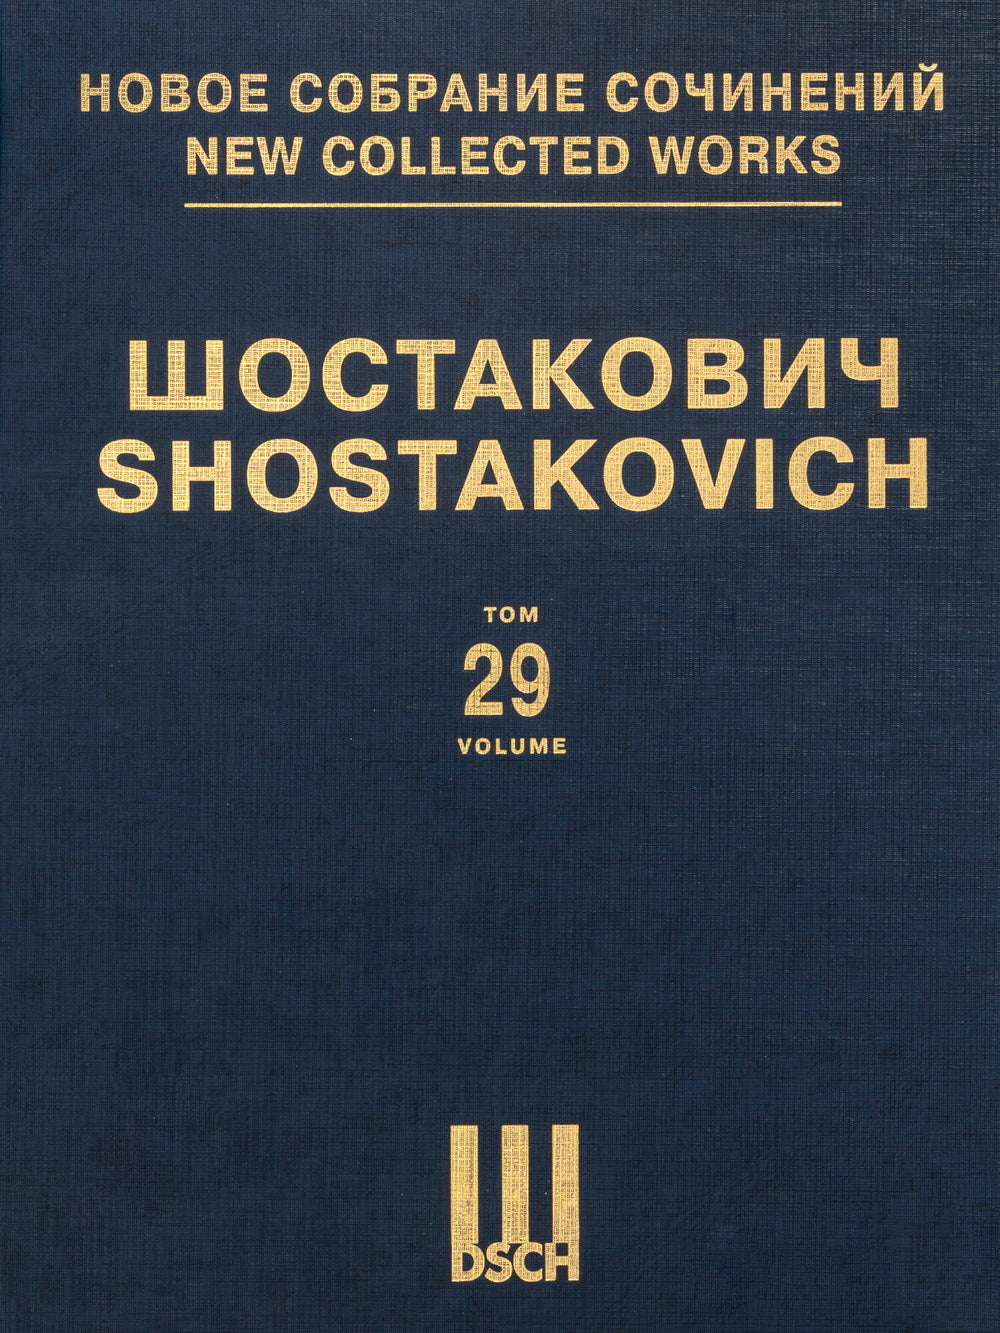 Shostakovich: Symphony No 14, Op. 135